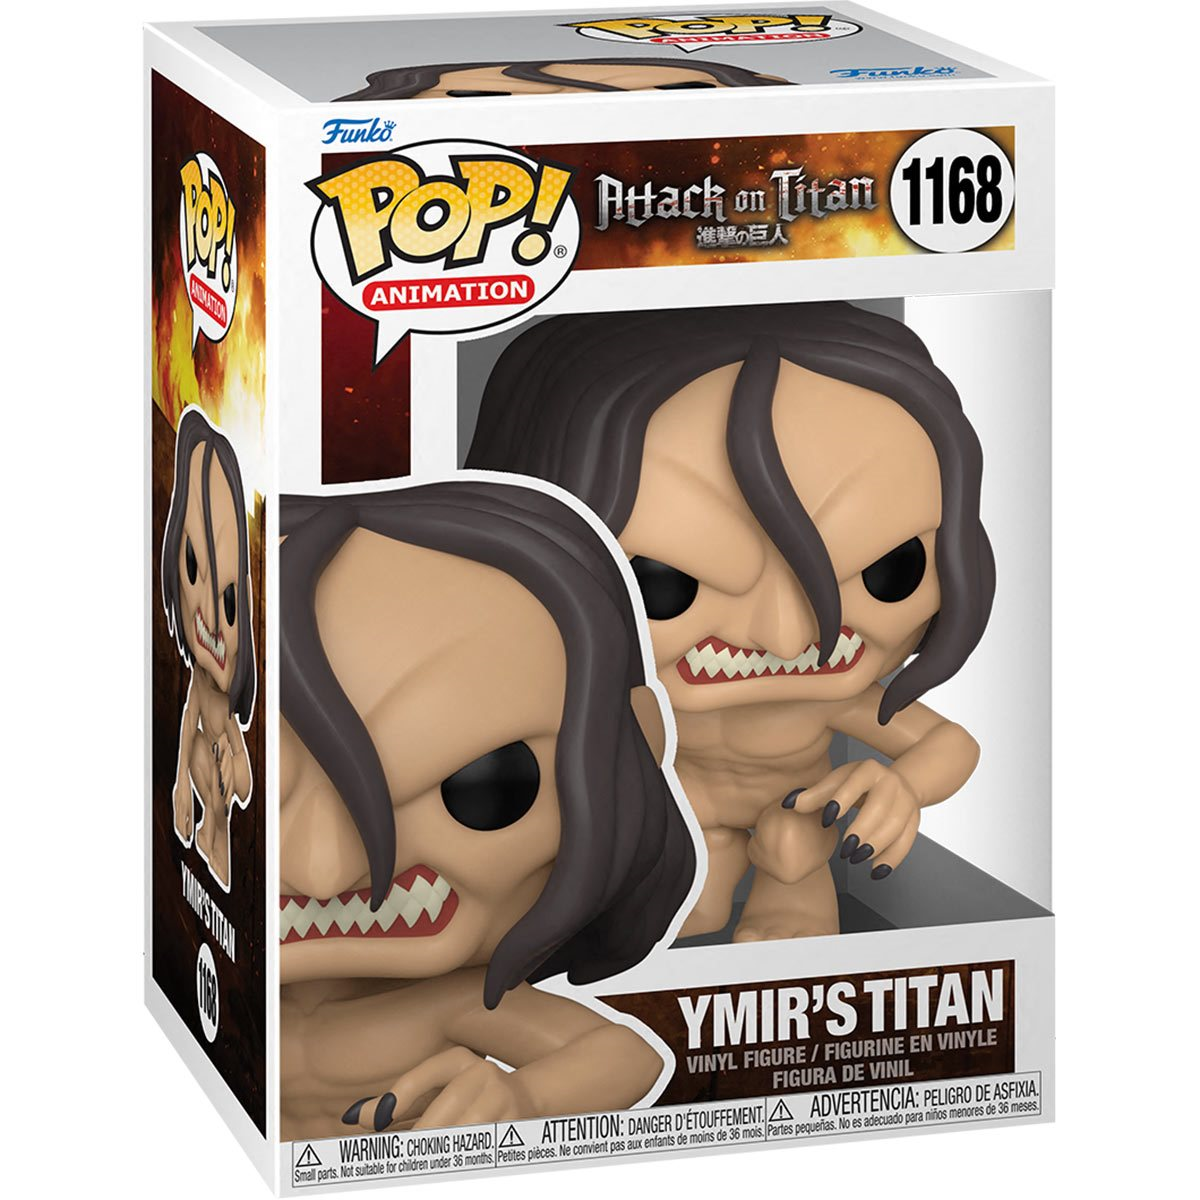 Ymir's Titan #1168 - Attack on Titan - Funko Pop! Vinyl Figure